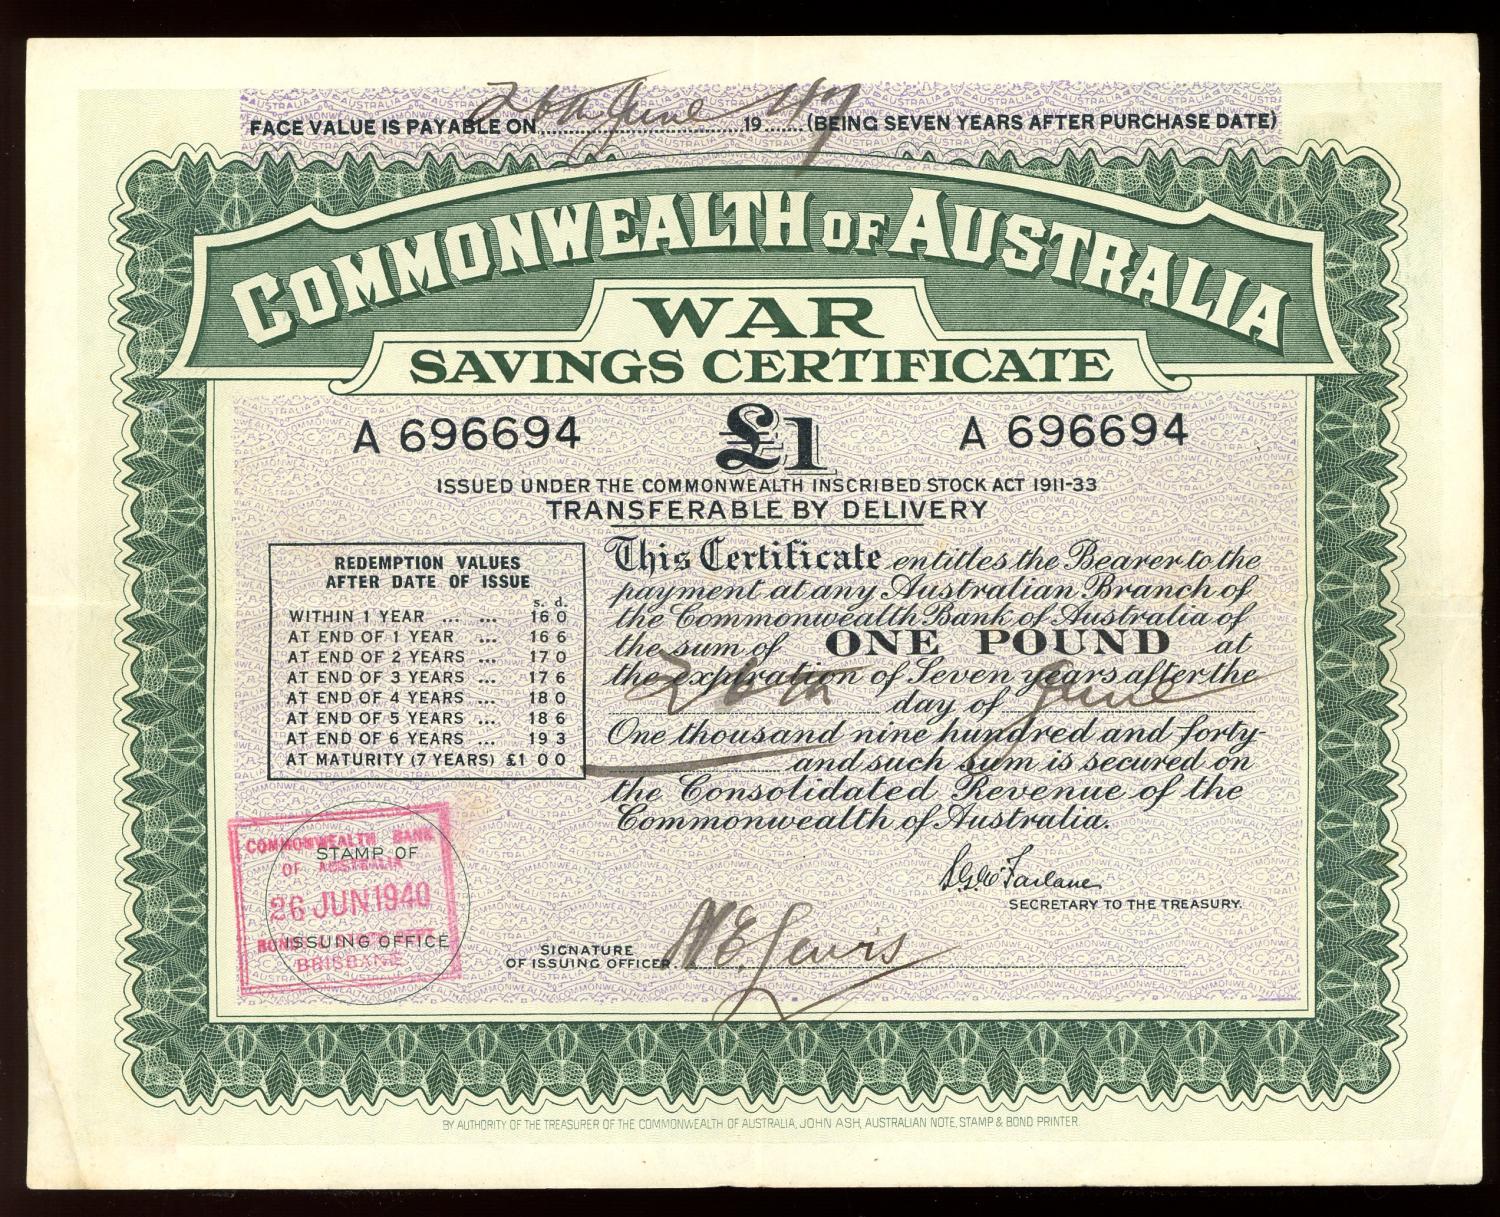 Thumbnail for June 1940 £1 War Savings Certificate - A696694